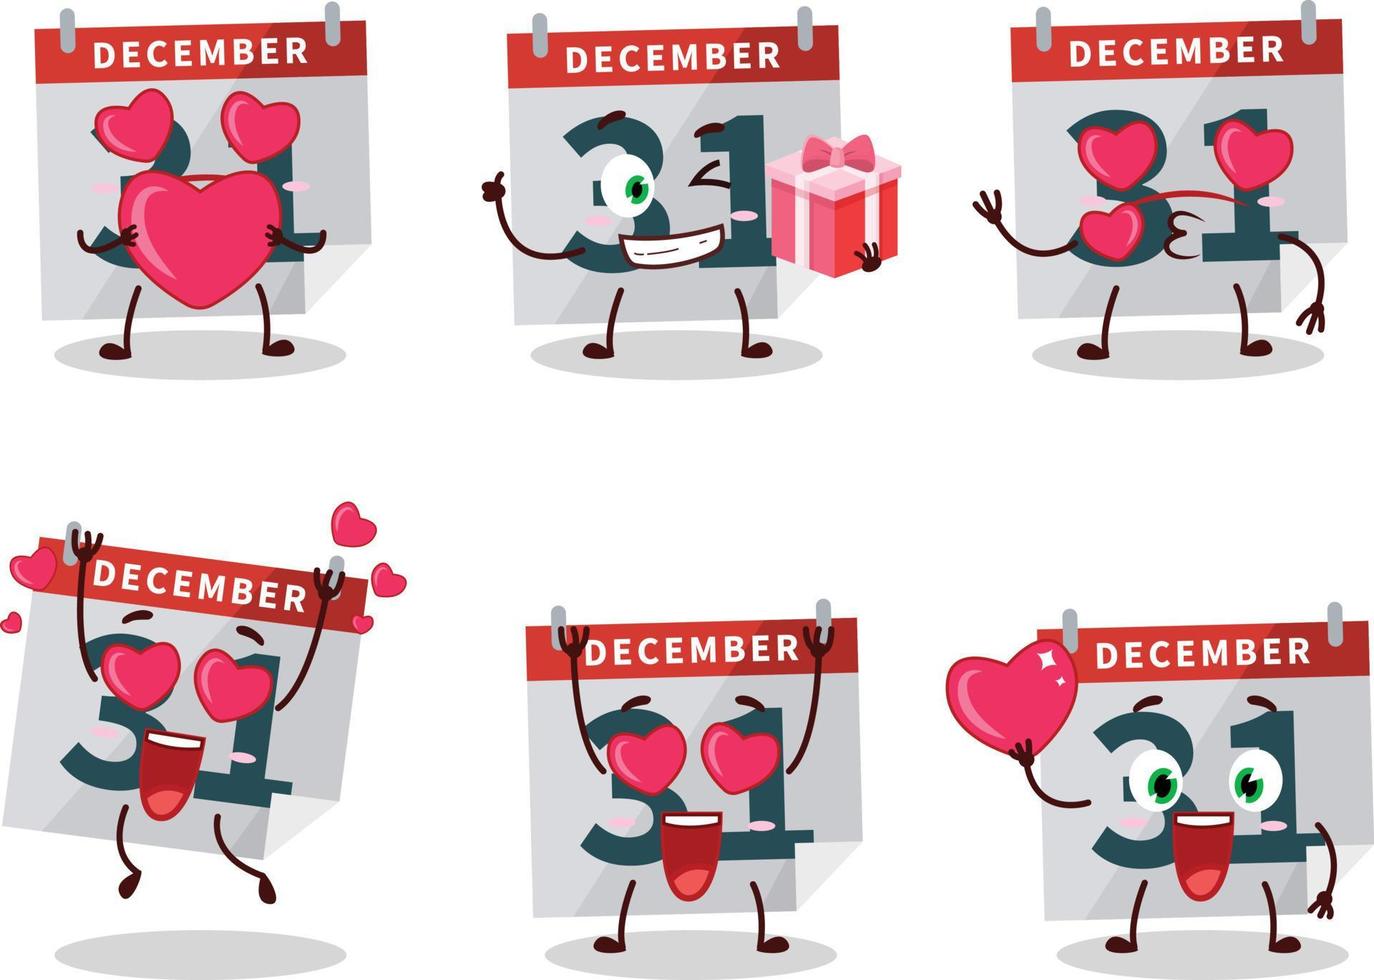 December 31th calendar cartoon character with love cute emoticon vector